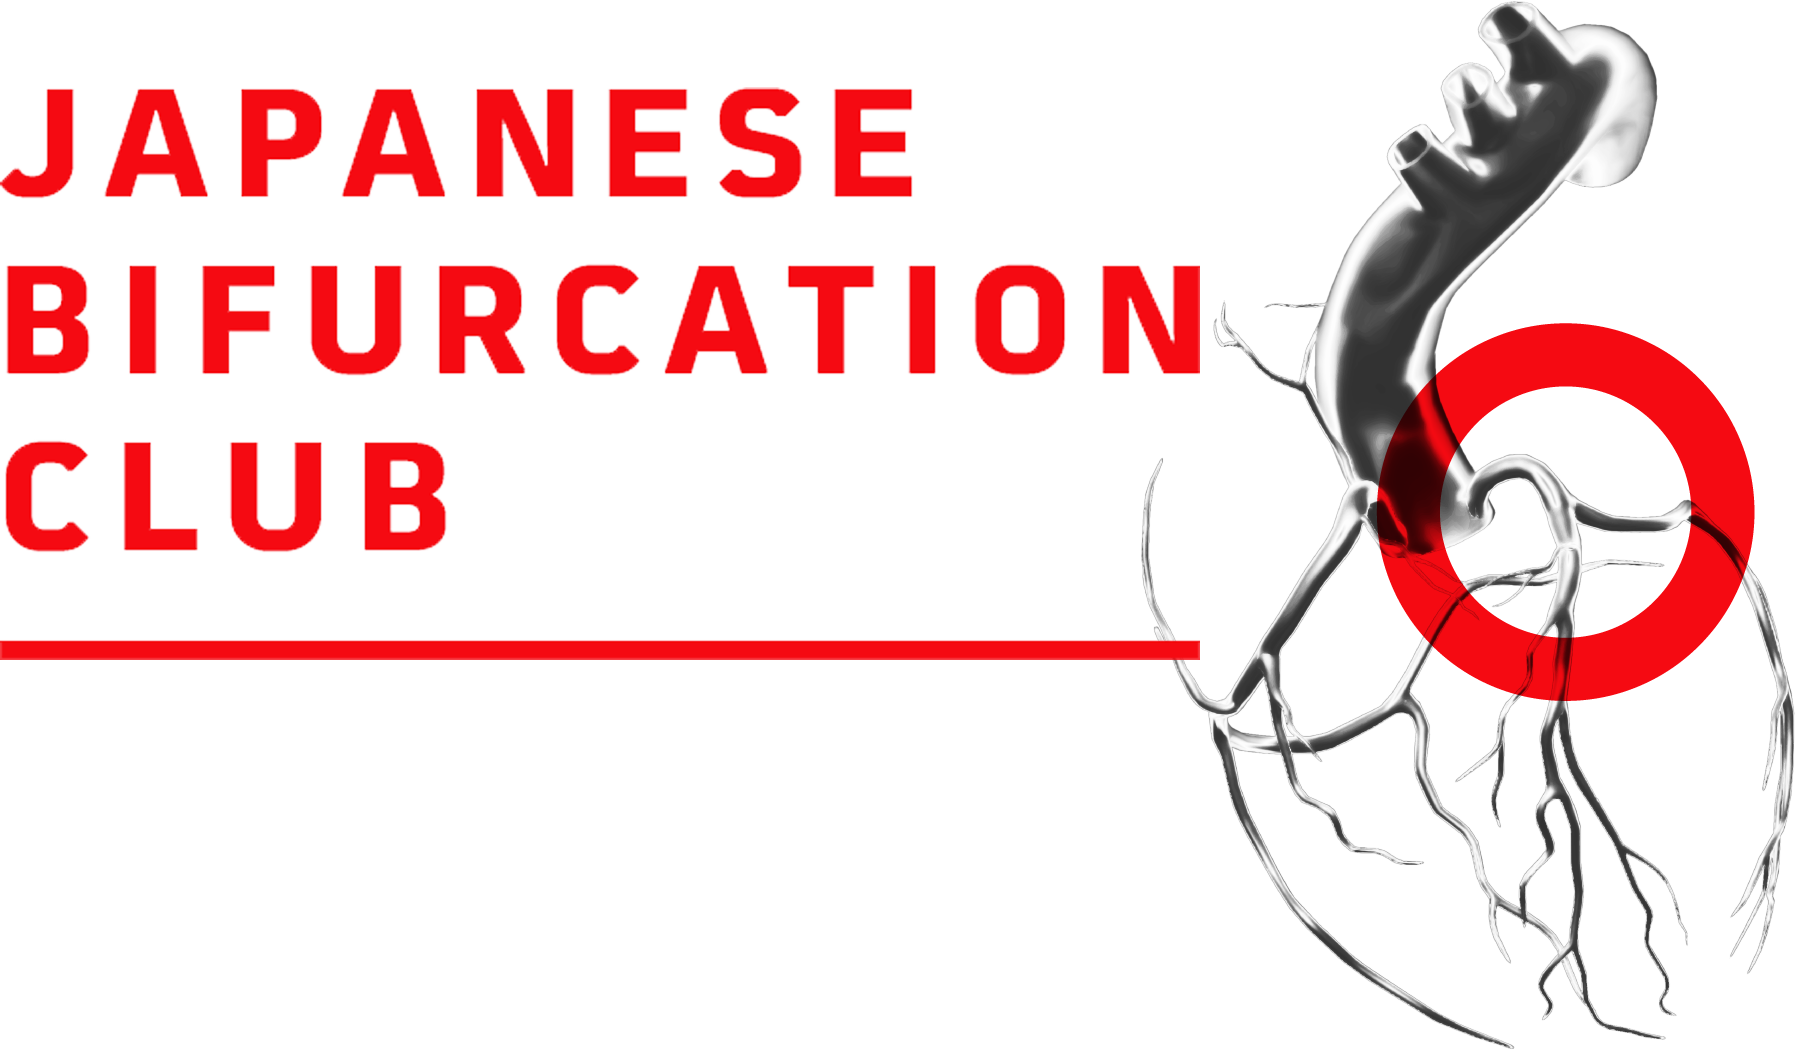 Japanese Bifurcation Club